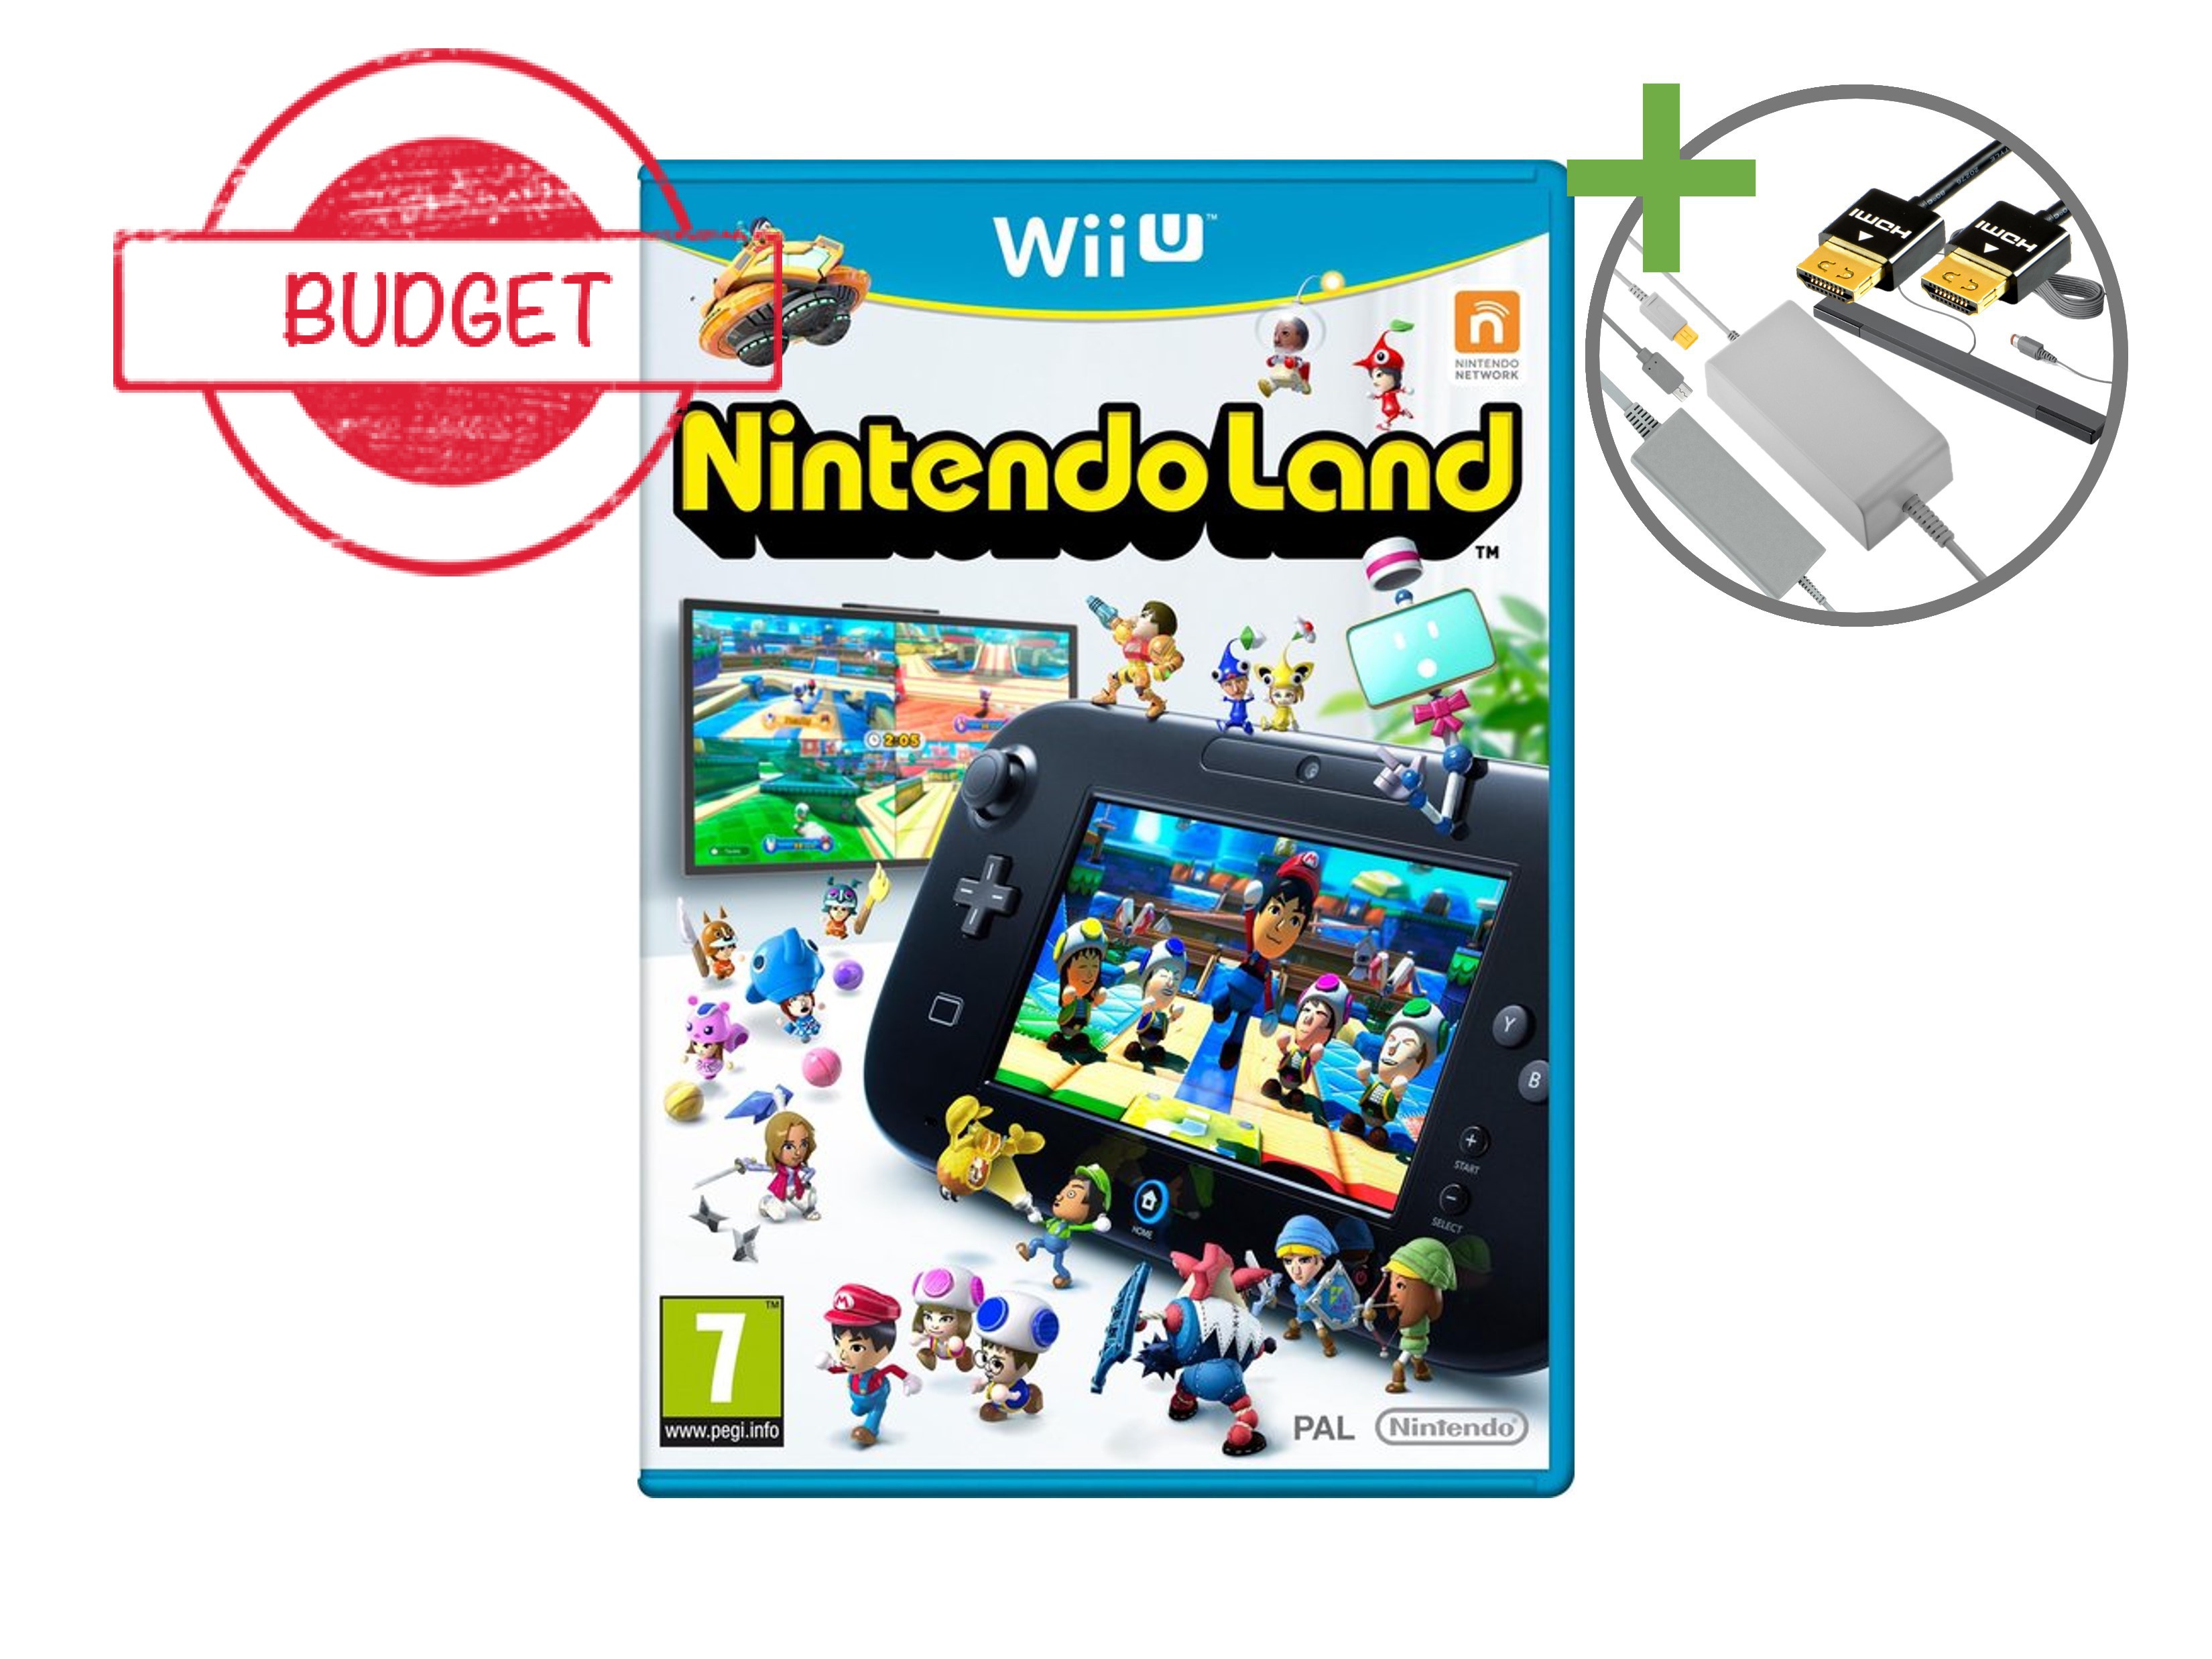 Nintendo Wii U Starter Pack - Deluxe Set Edition - Budget - Wii U Hardware - 4